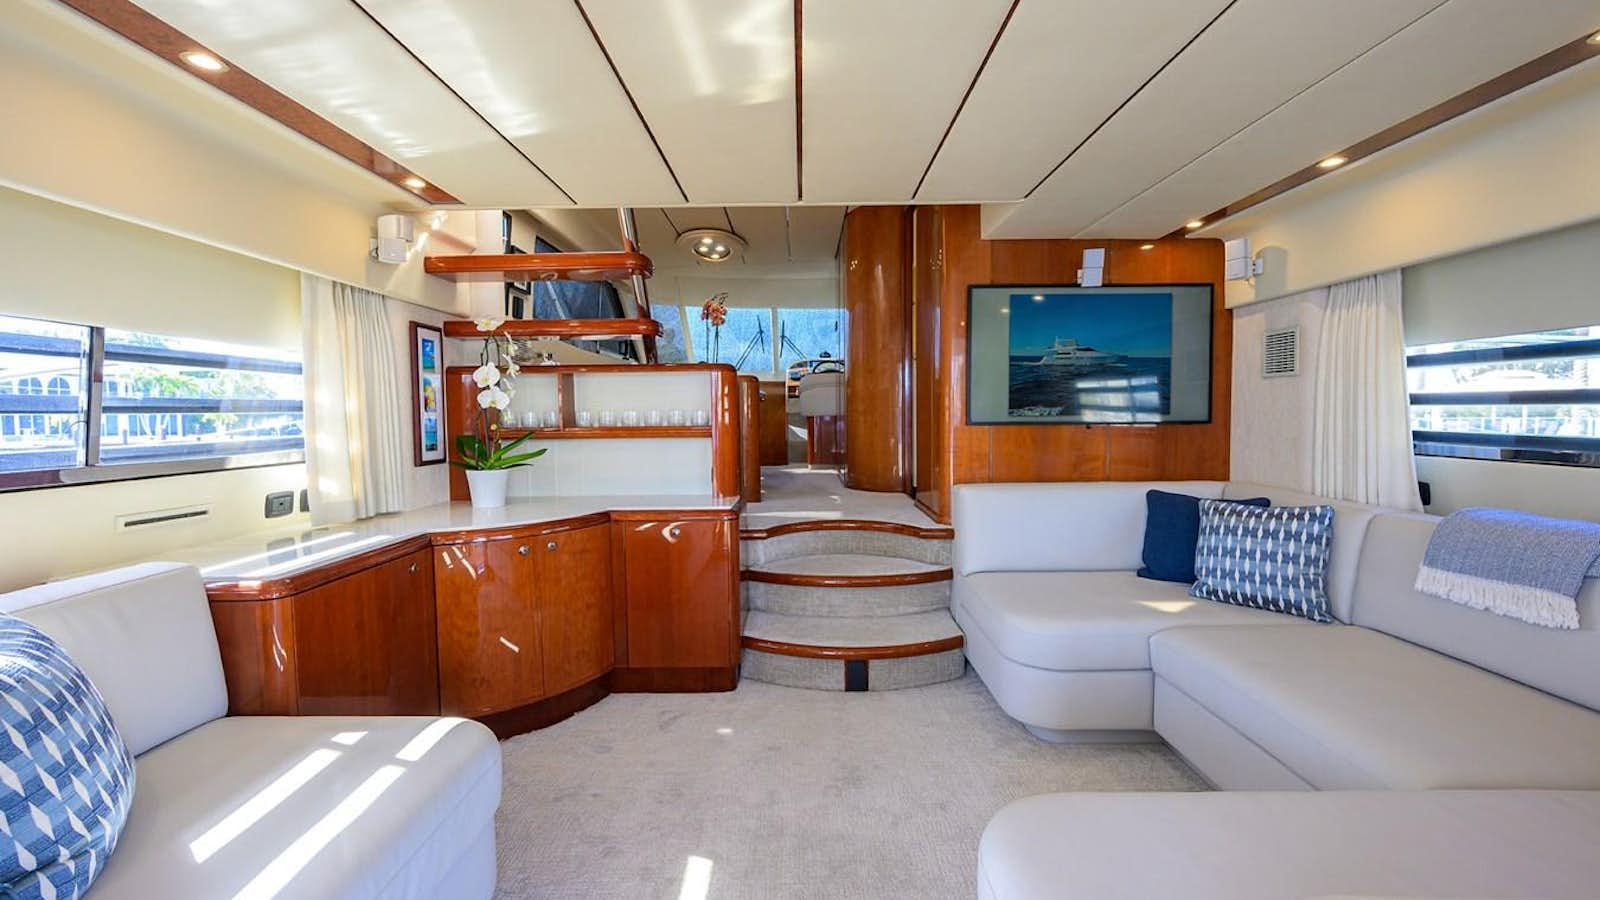 Sea hawk
Yacht for Sale